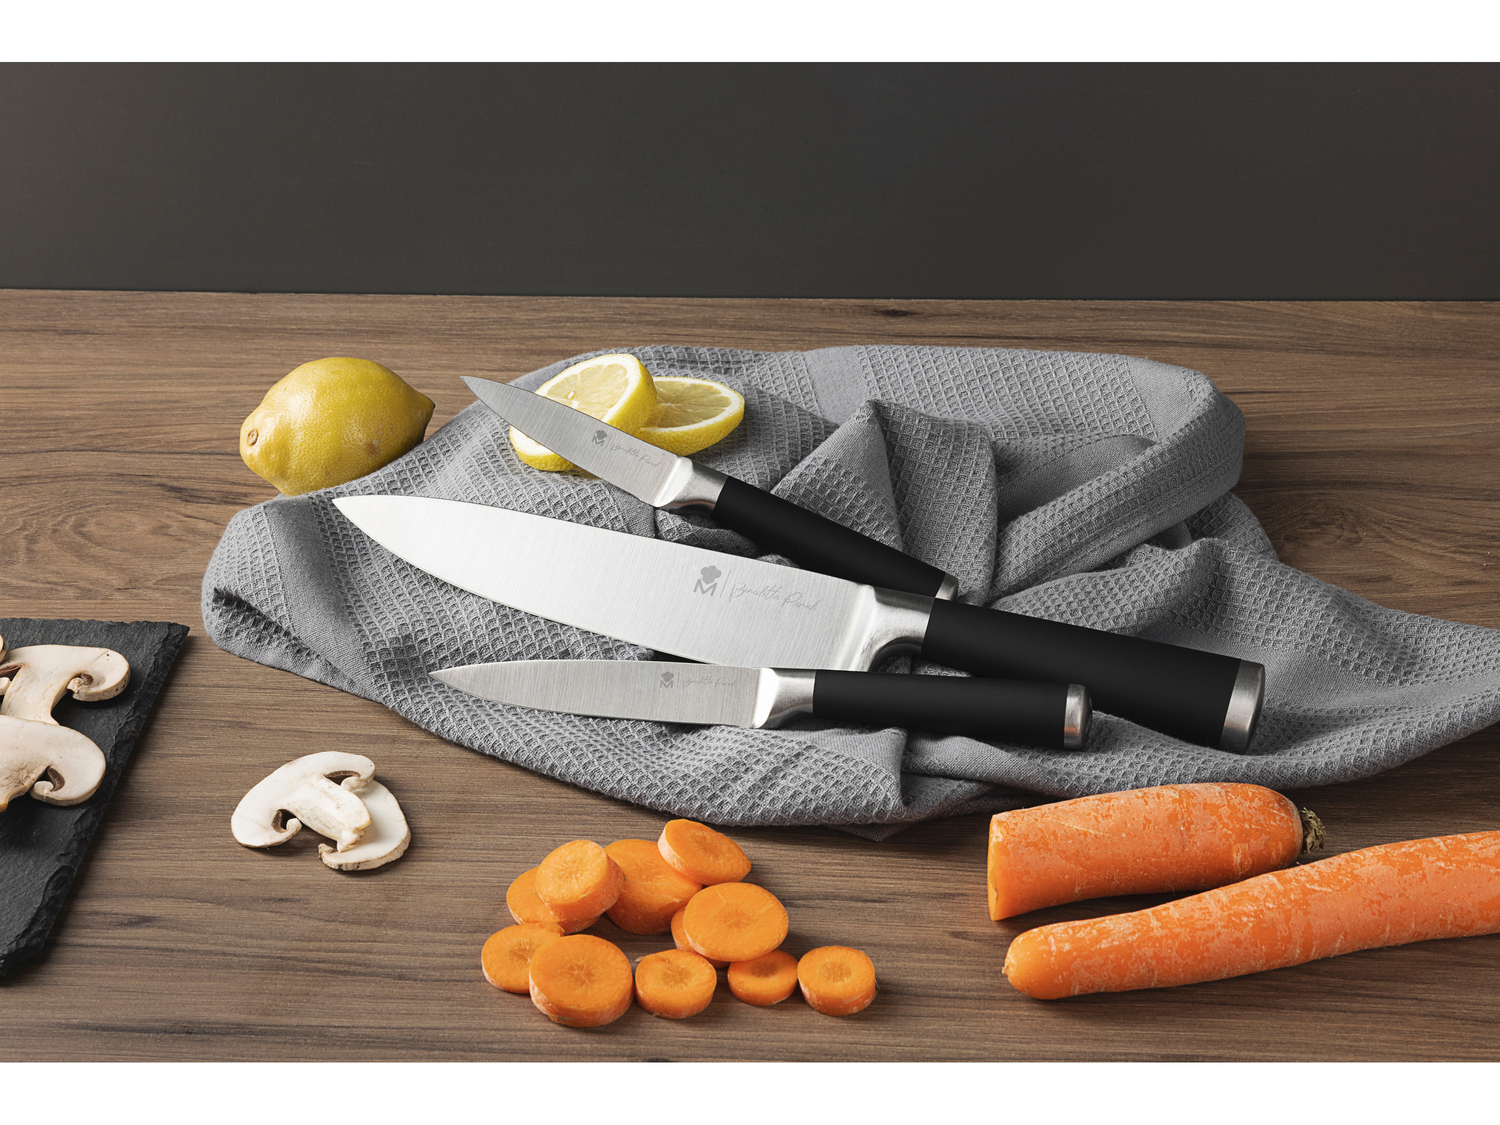 Set coltelli Masterpro, prezzo 19.99 &#8364; 
3 pezzi 
- Coltello chef, coltello ...